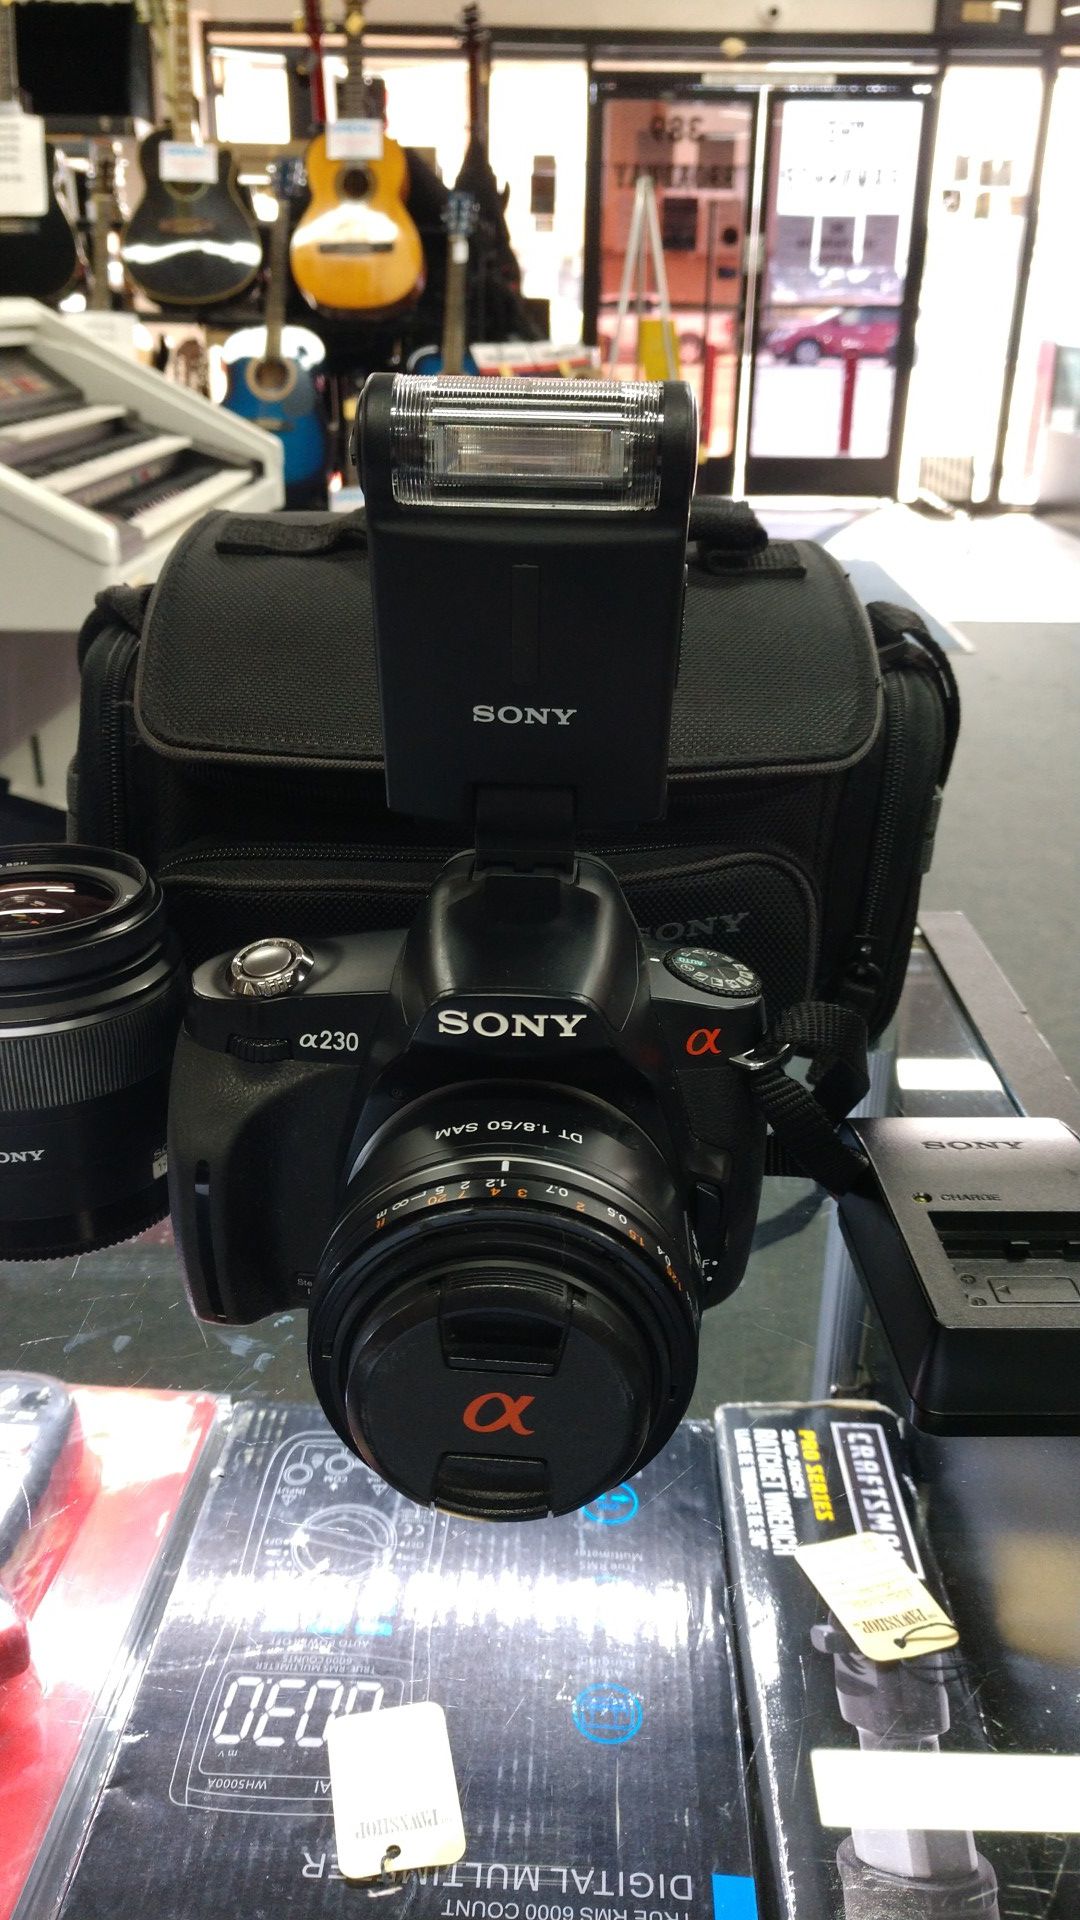 Sony Alpha 230 Digital SLR Camera & DT 1.8/50 SAM Lens w/ Sony Flash and Extra Lens